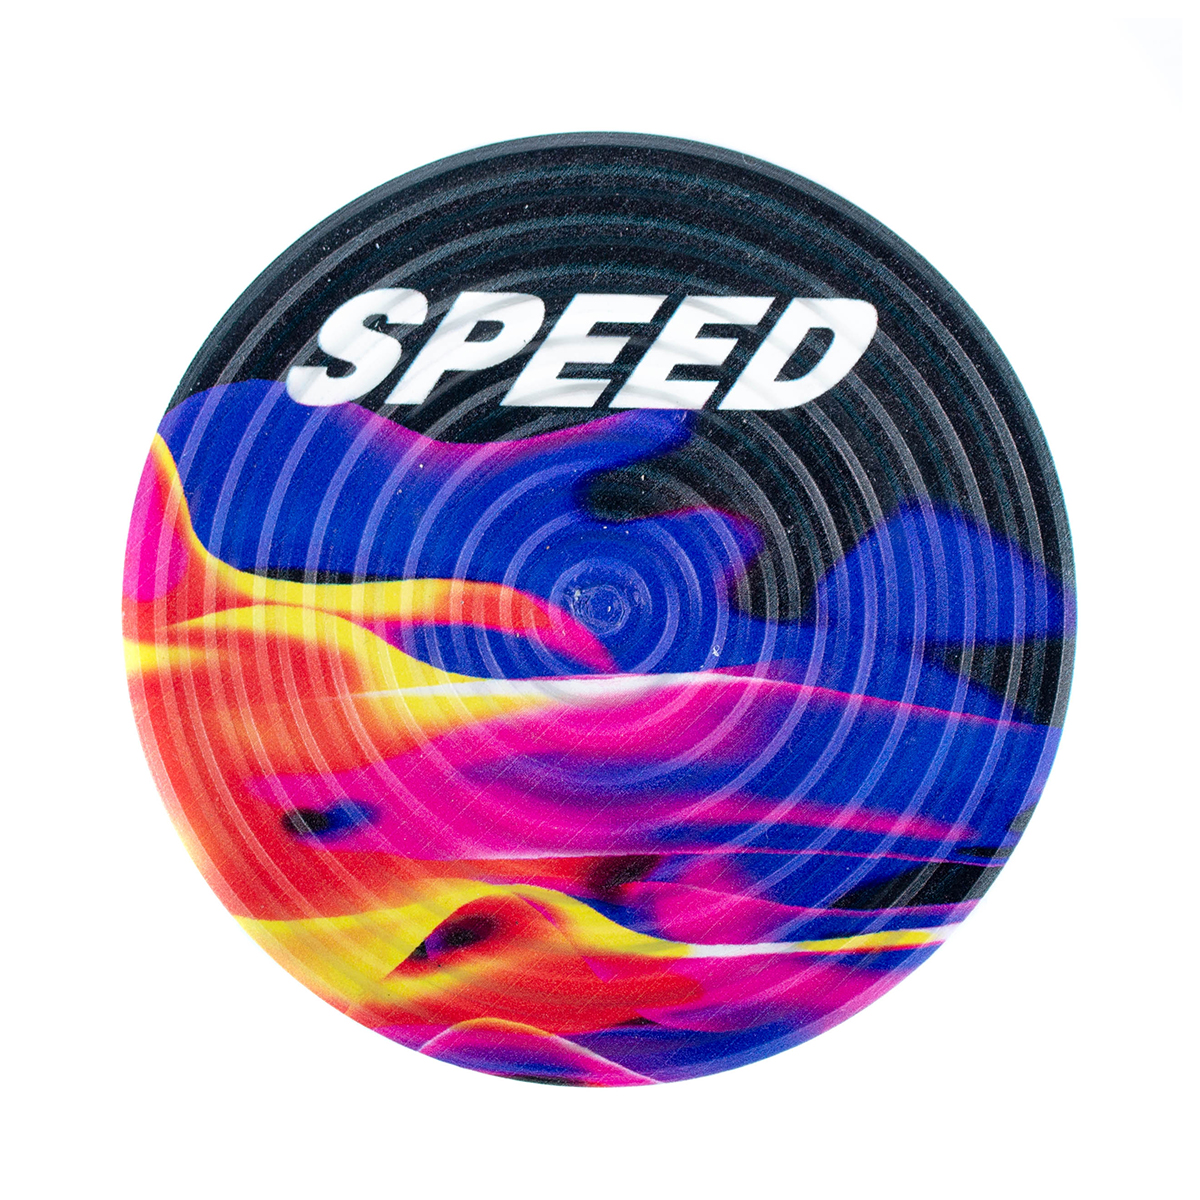 Спиннер-диск "Speed"